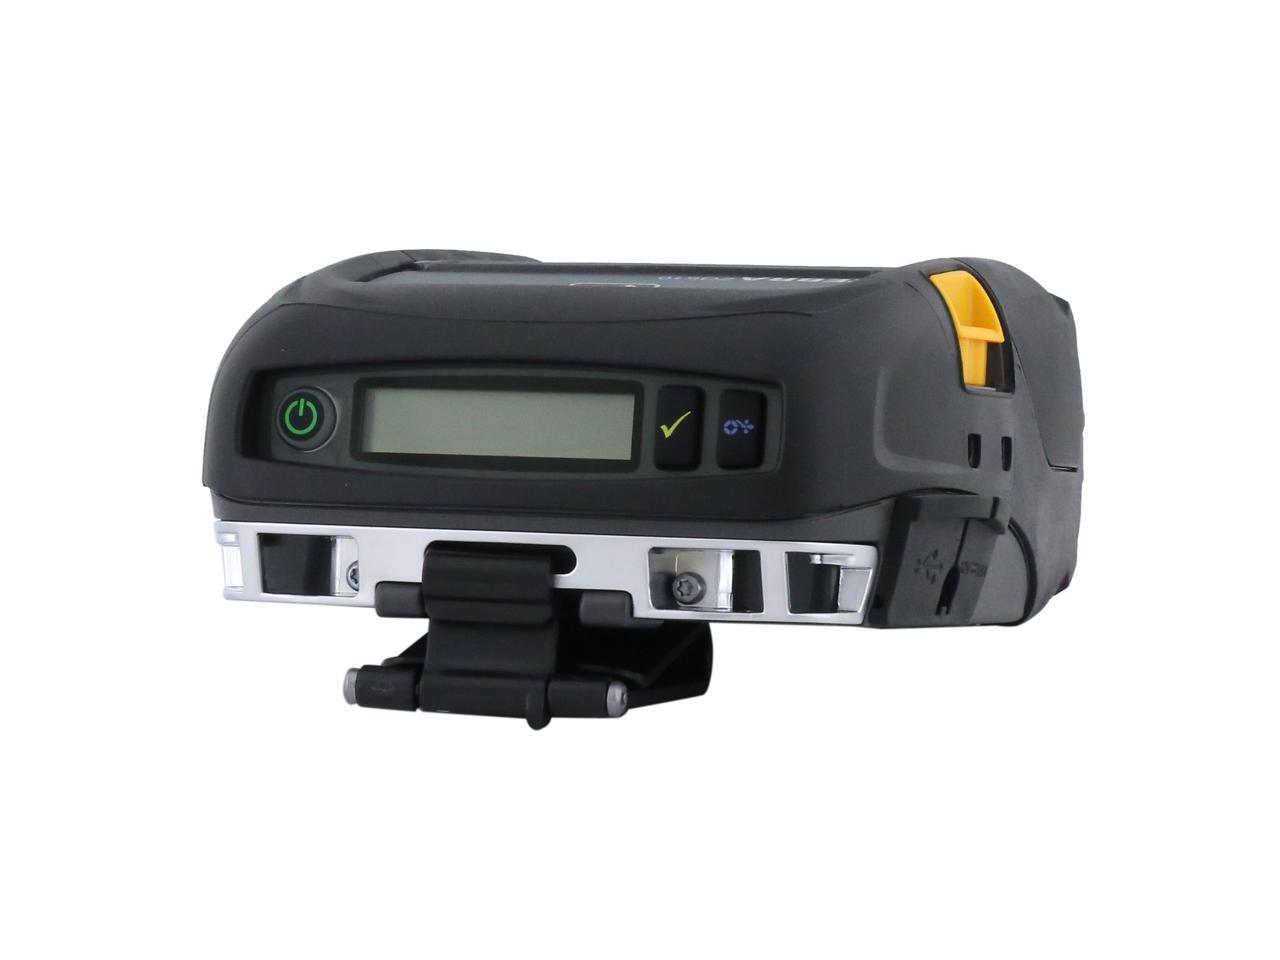 Zebra Zq510 3 Mobile Direct Thermal Receipt And Label Printer 203 Dpi 1800